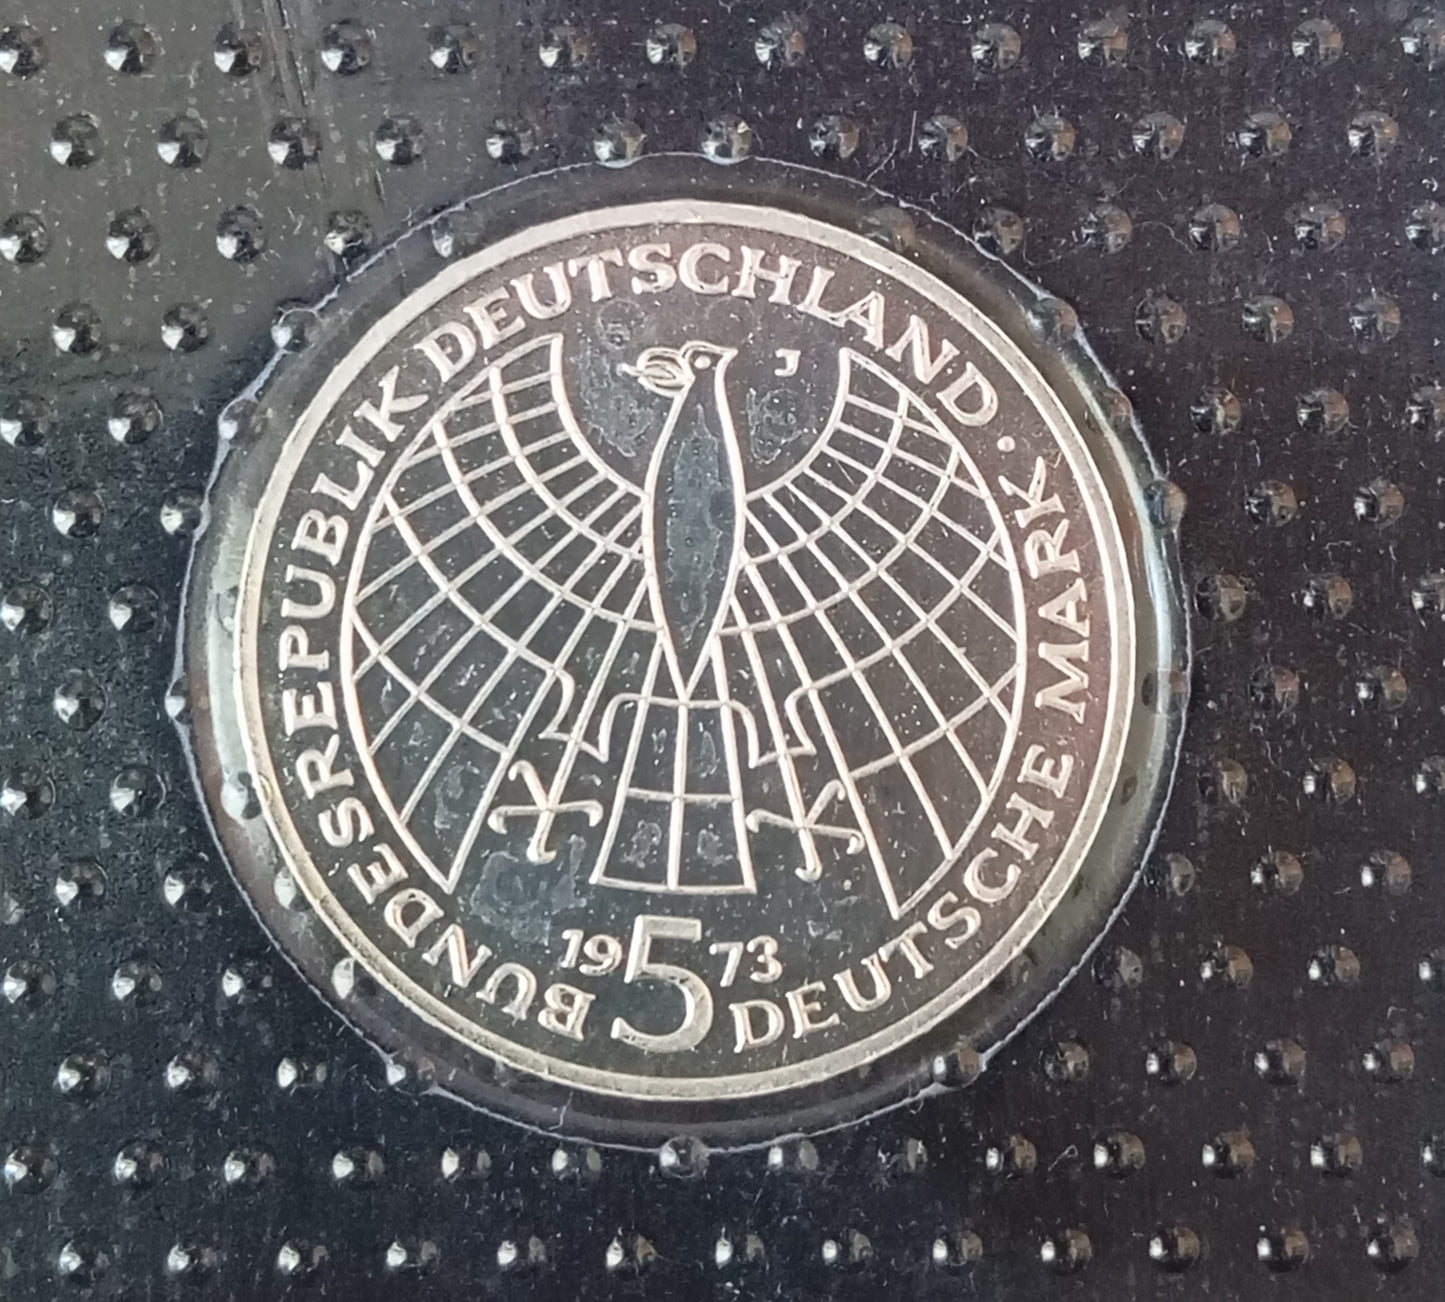 500TH BIRTHDAY OF NICHOLAS COPERNIQUE, series 5 DM silver coin, 1973